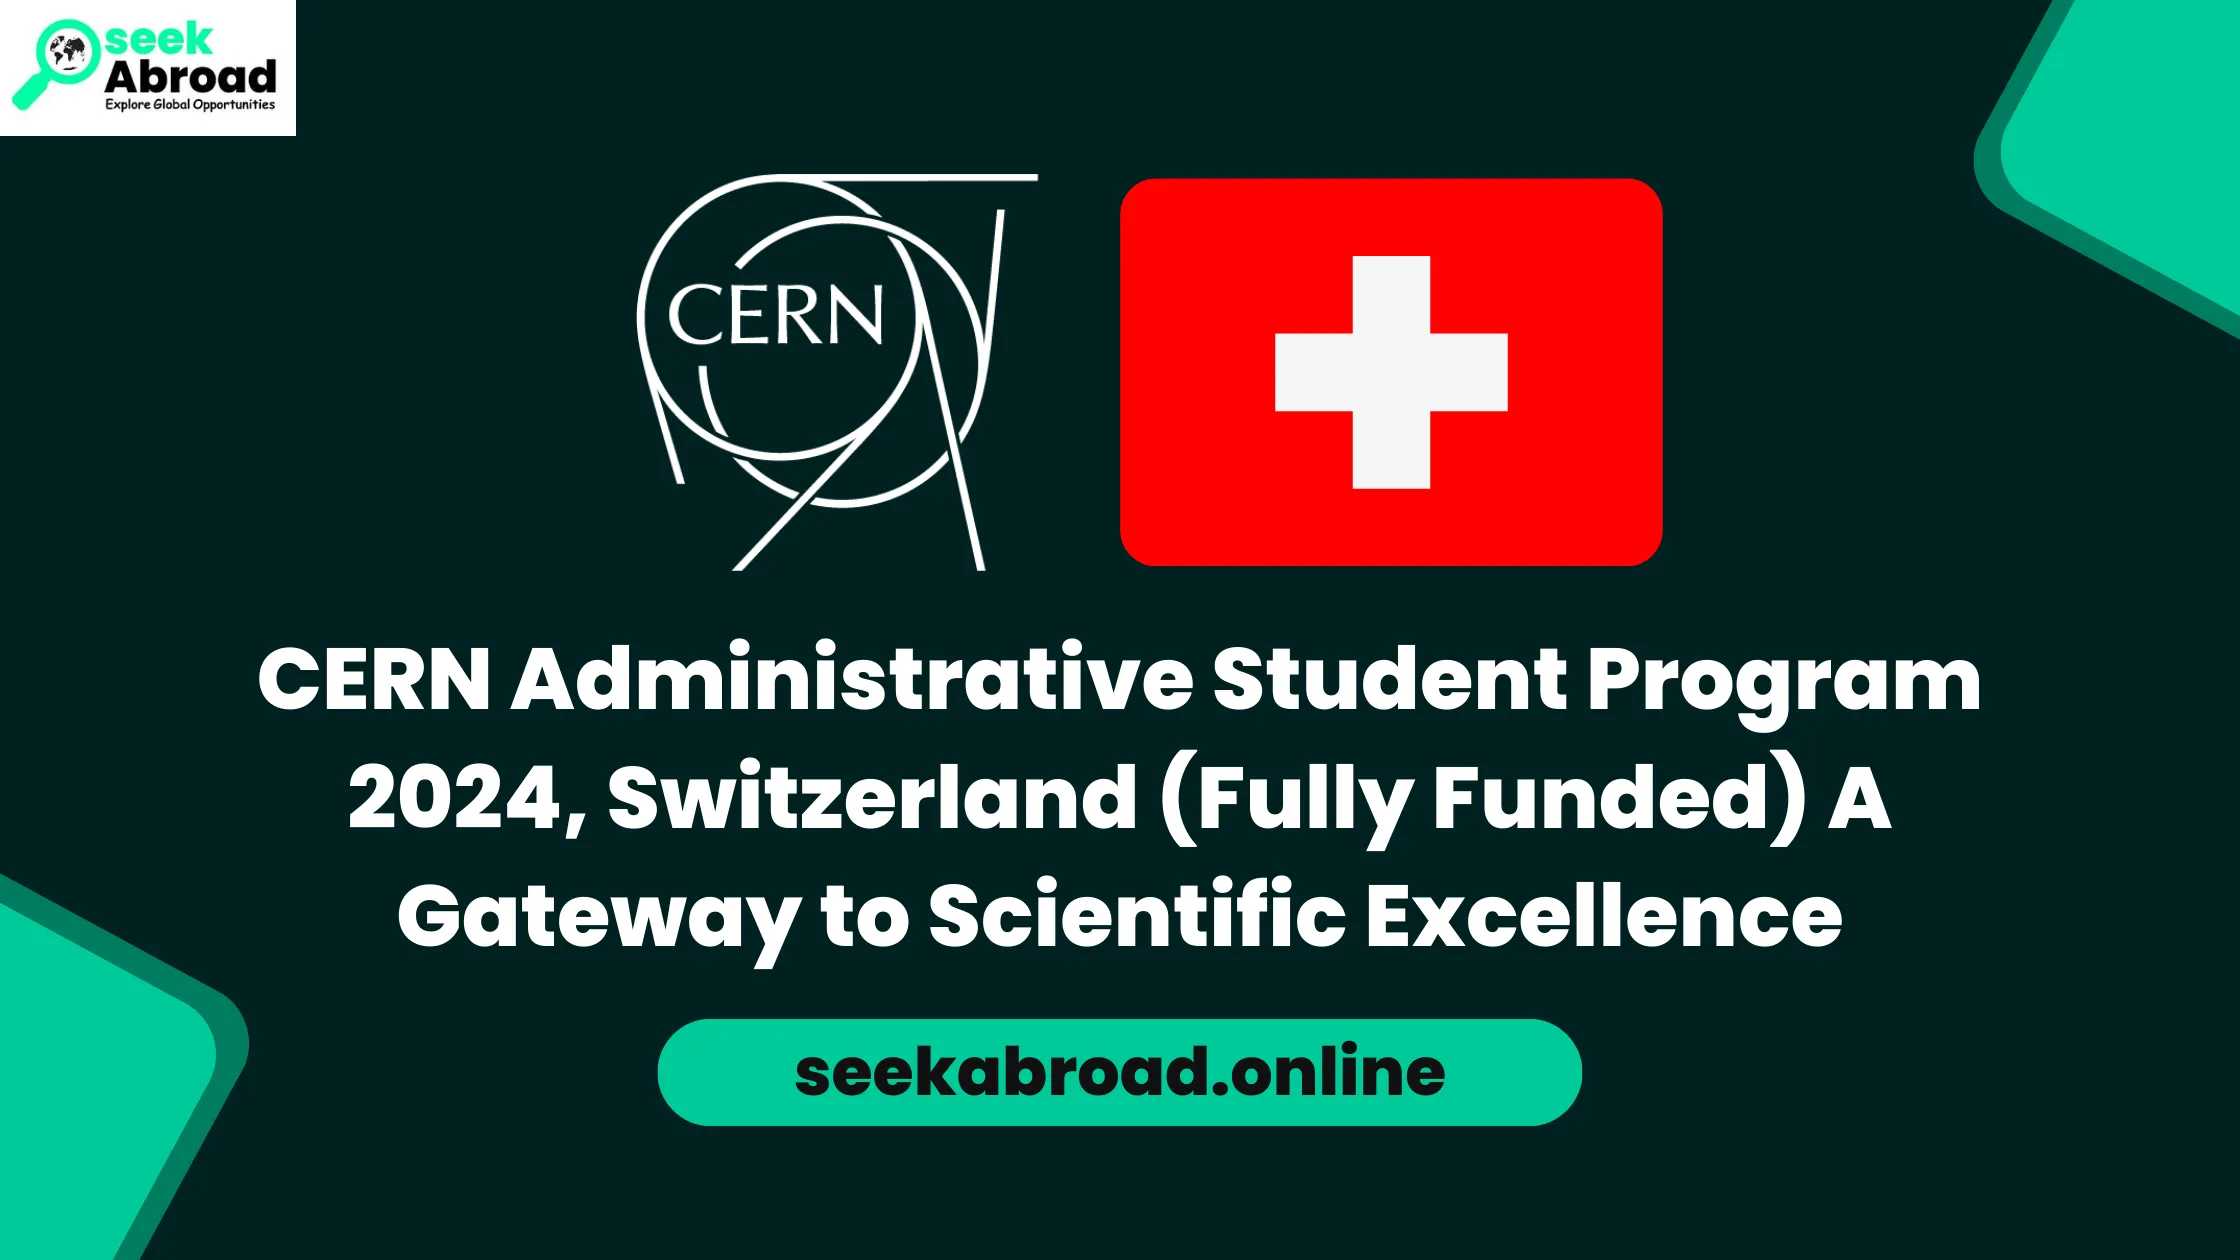 CERN Administrative Student Program 2024 A Gateway to Scientific